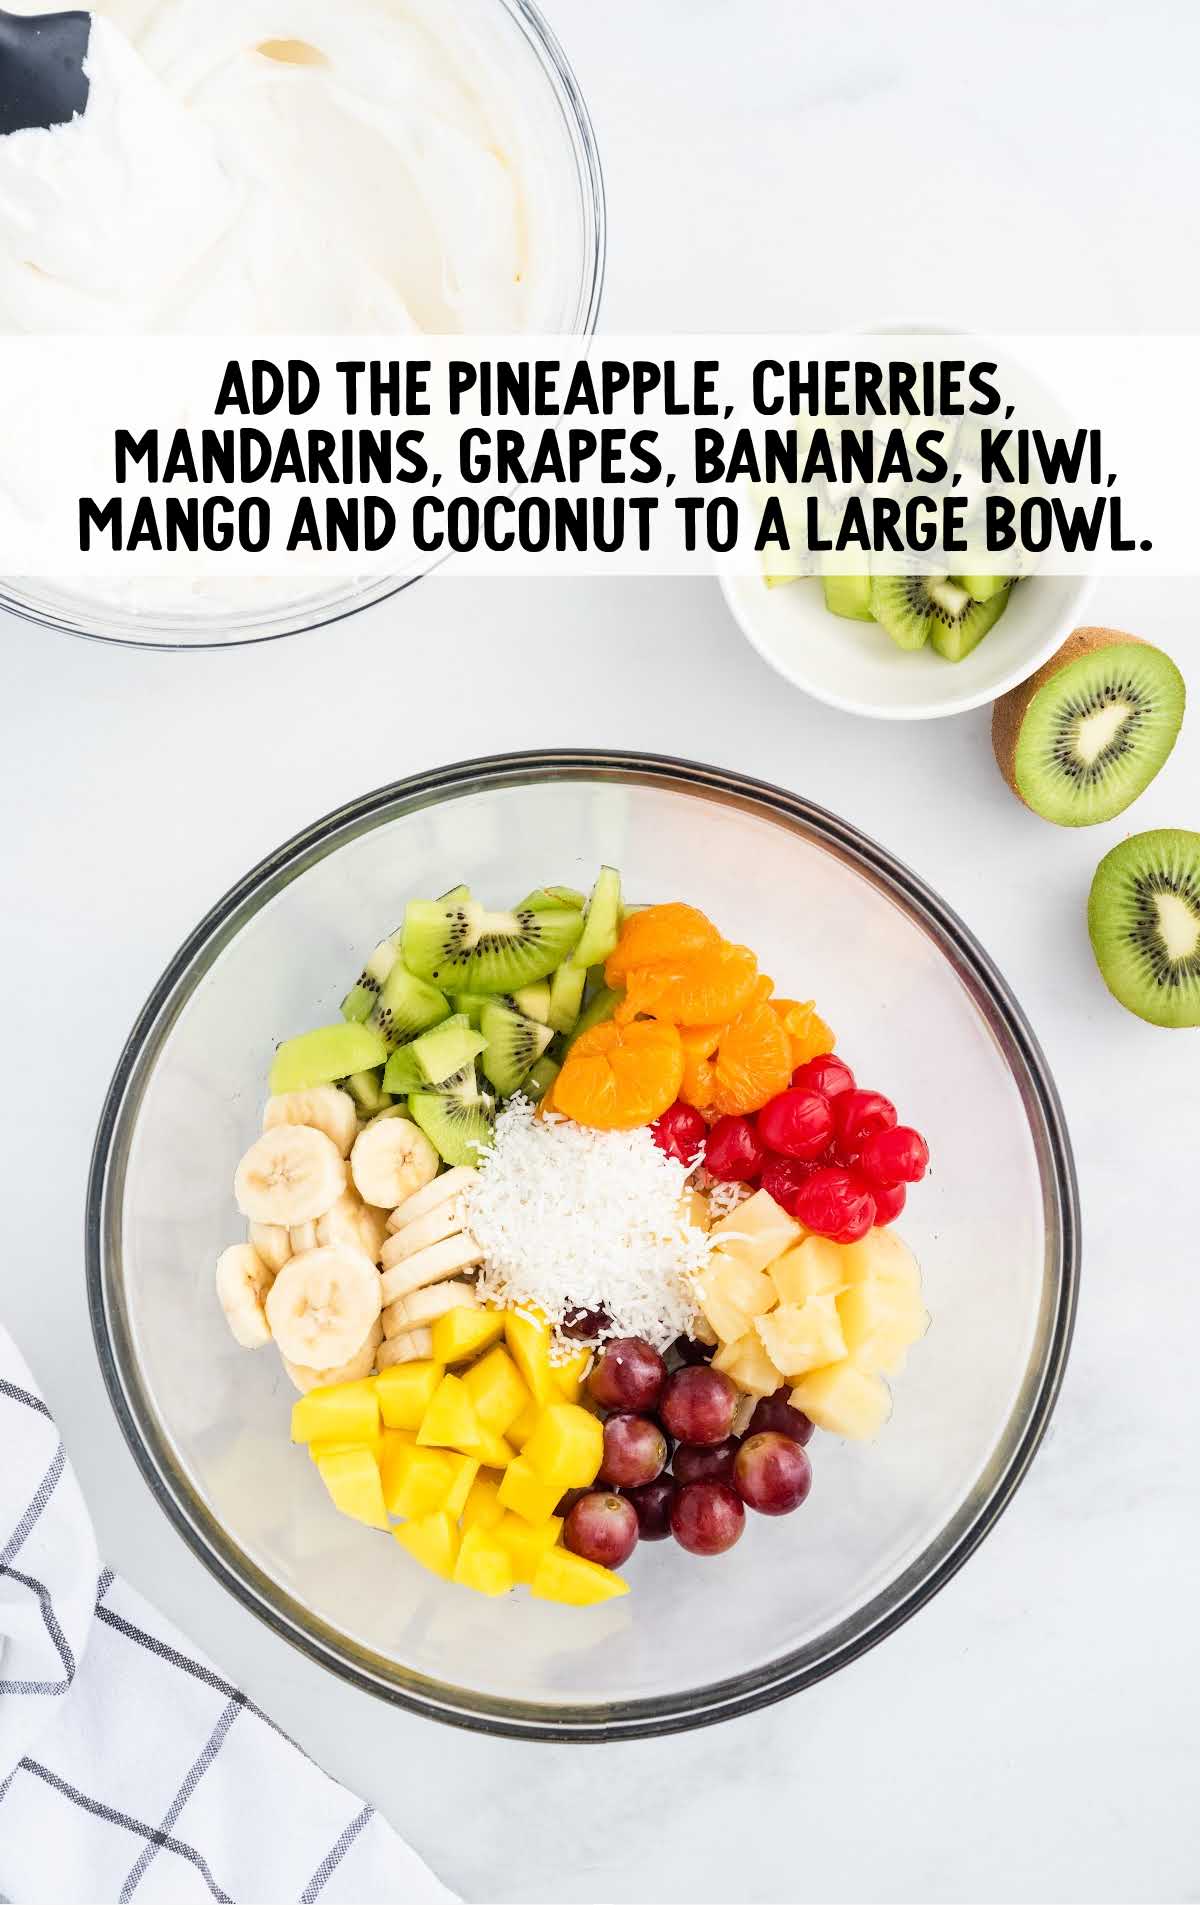 pineapple, cherries, mandarins, grapes, bananas, kiwi, mango, and coconut added to a large bowl